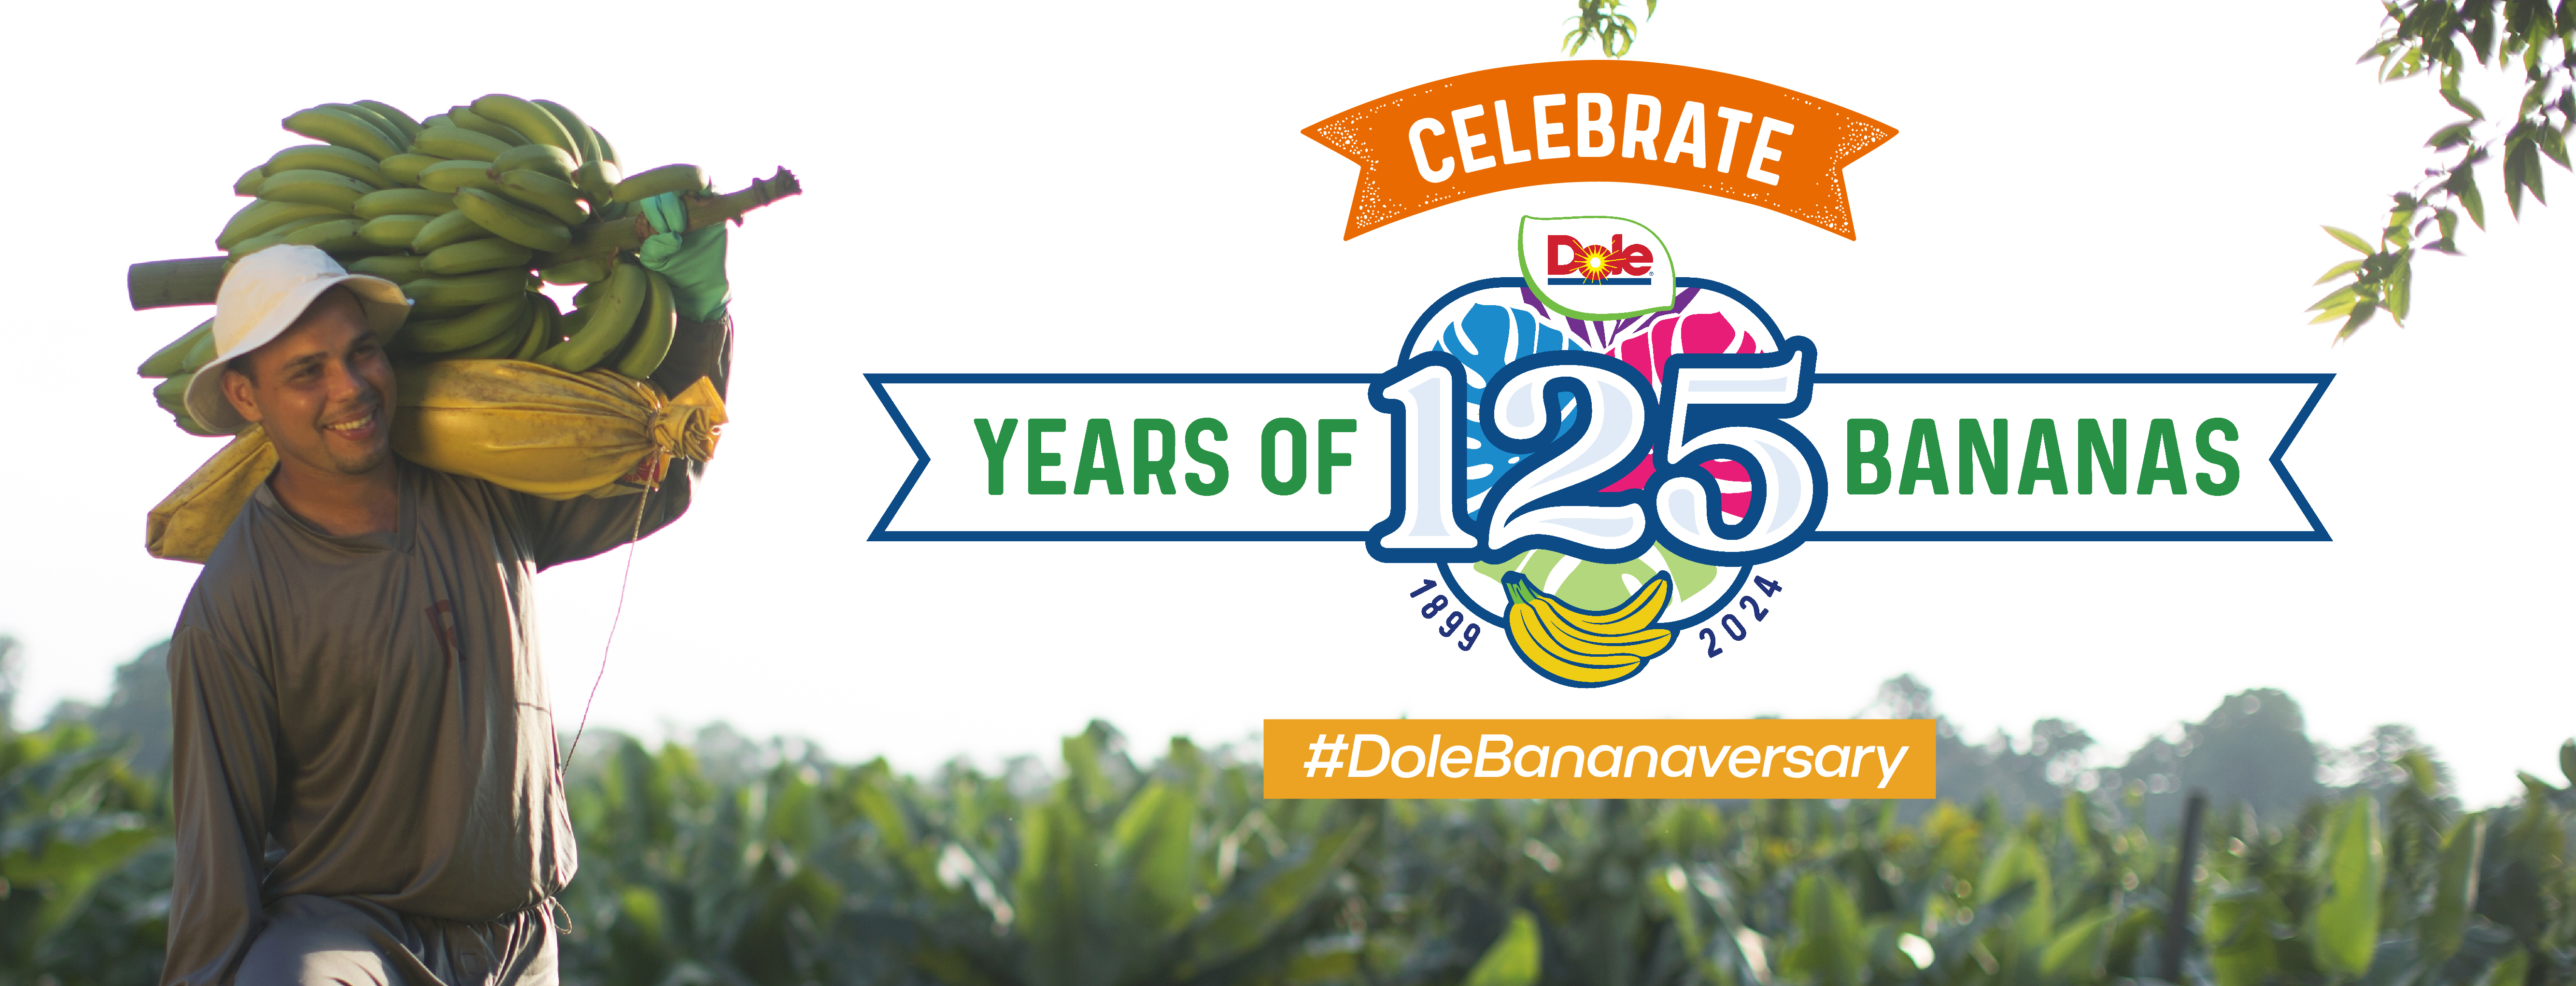 125 Years of Dole Bananas